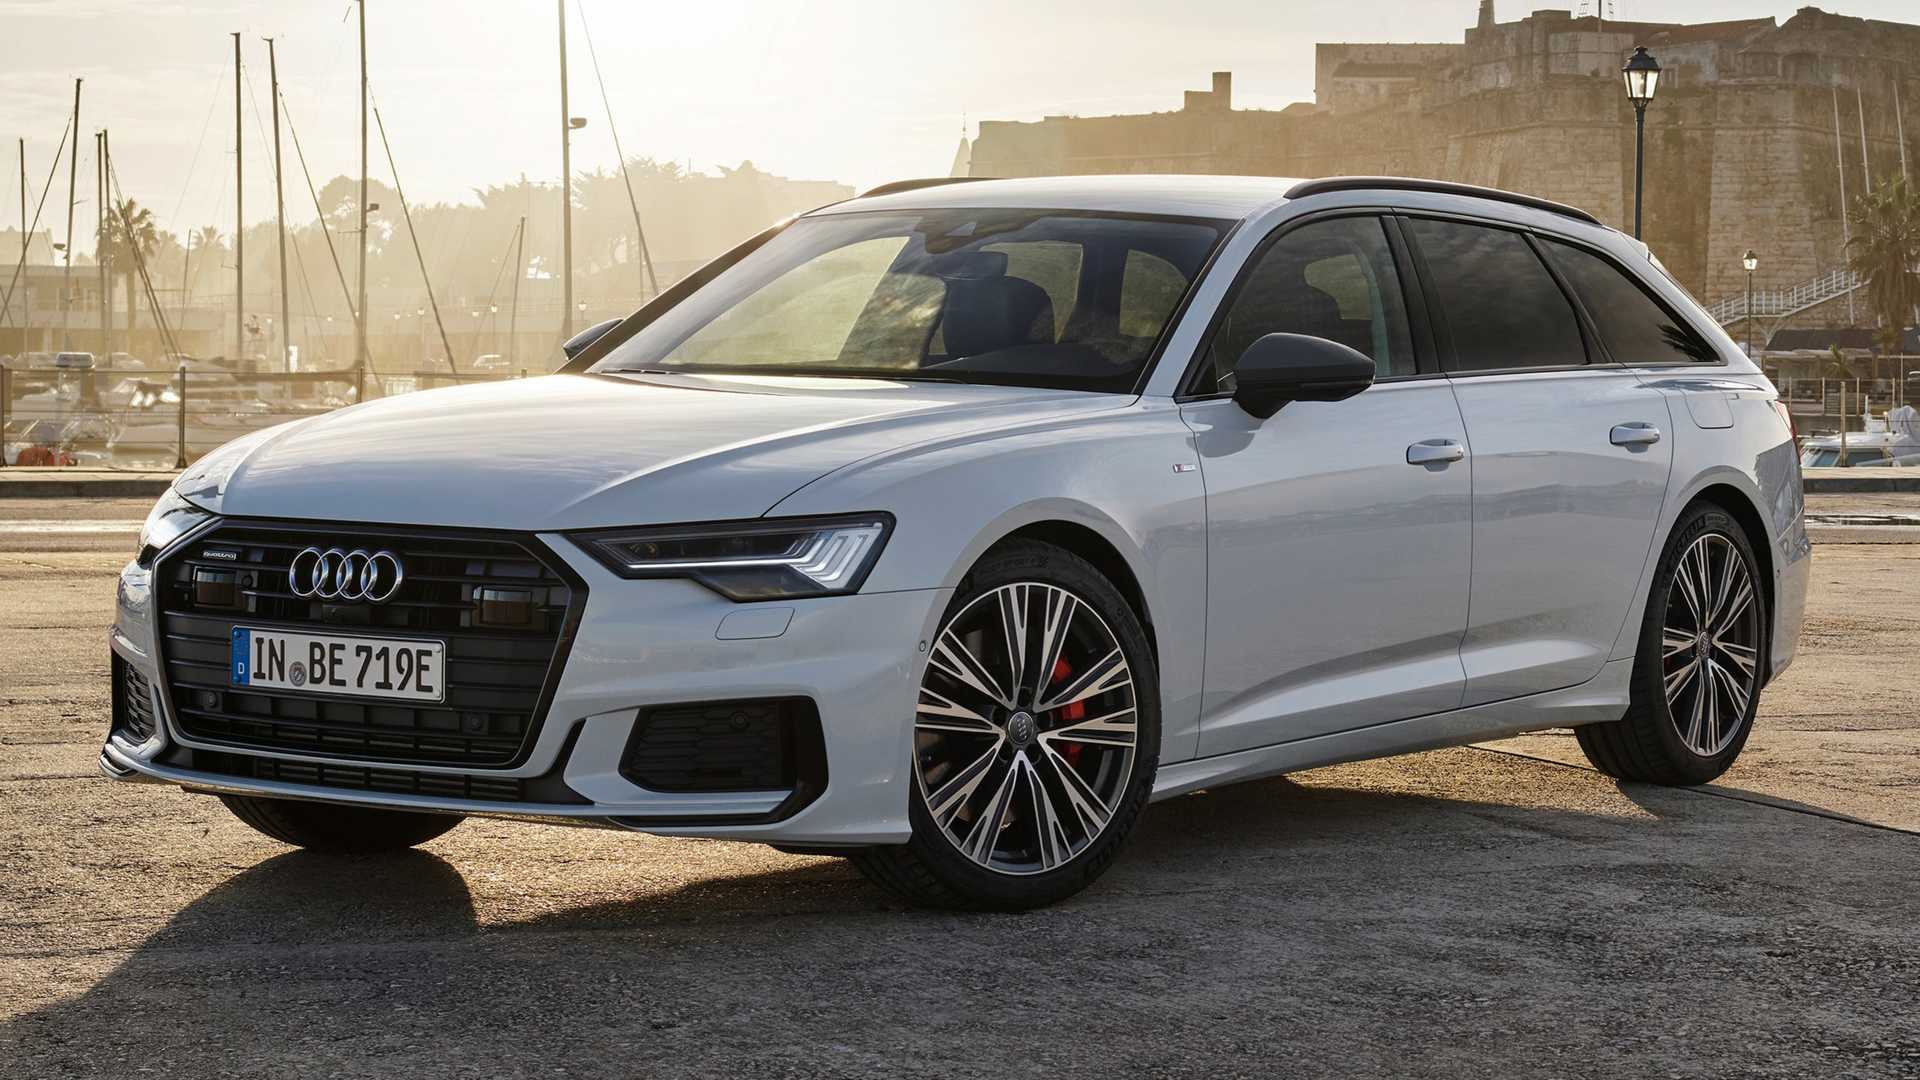 Audi A6 Avant Plug In Hybrid Gets 31 .motor1.com